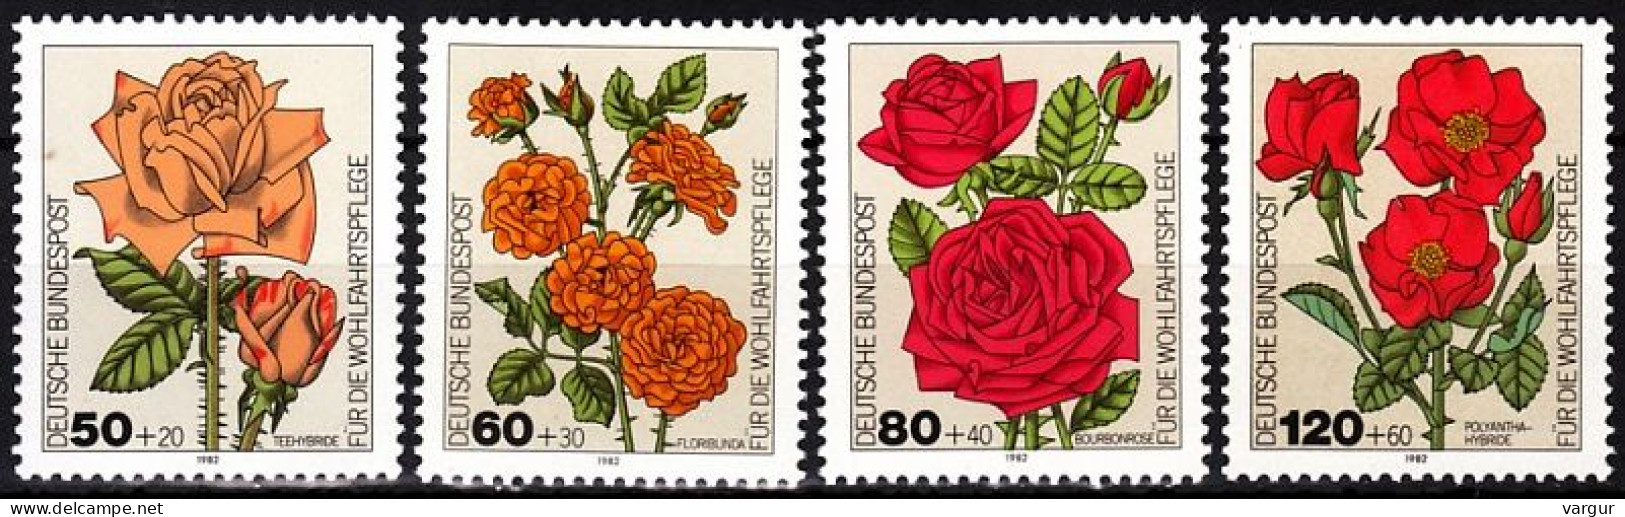 GERMANY FRG 1982 FLORA Plants Flowers: Garden Roses. Charity. Complete Set, MNH - Rosen